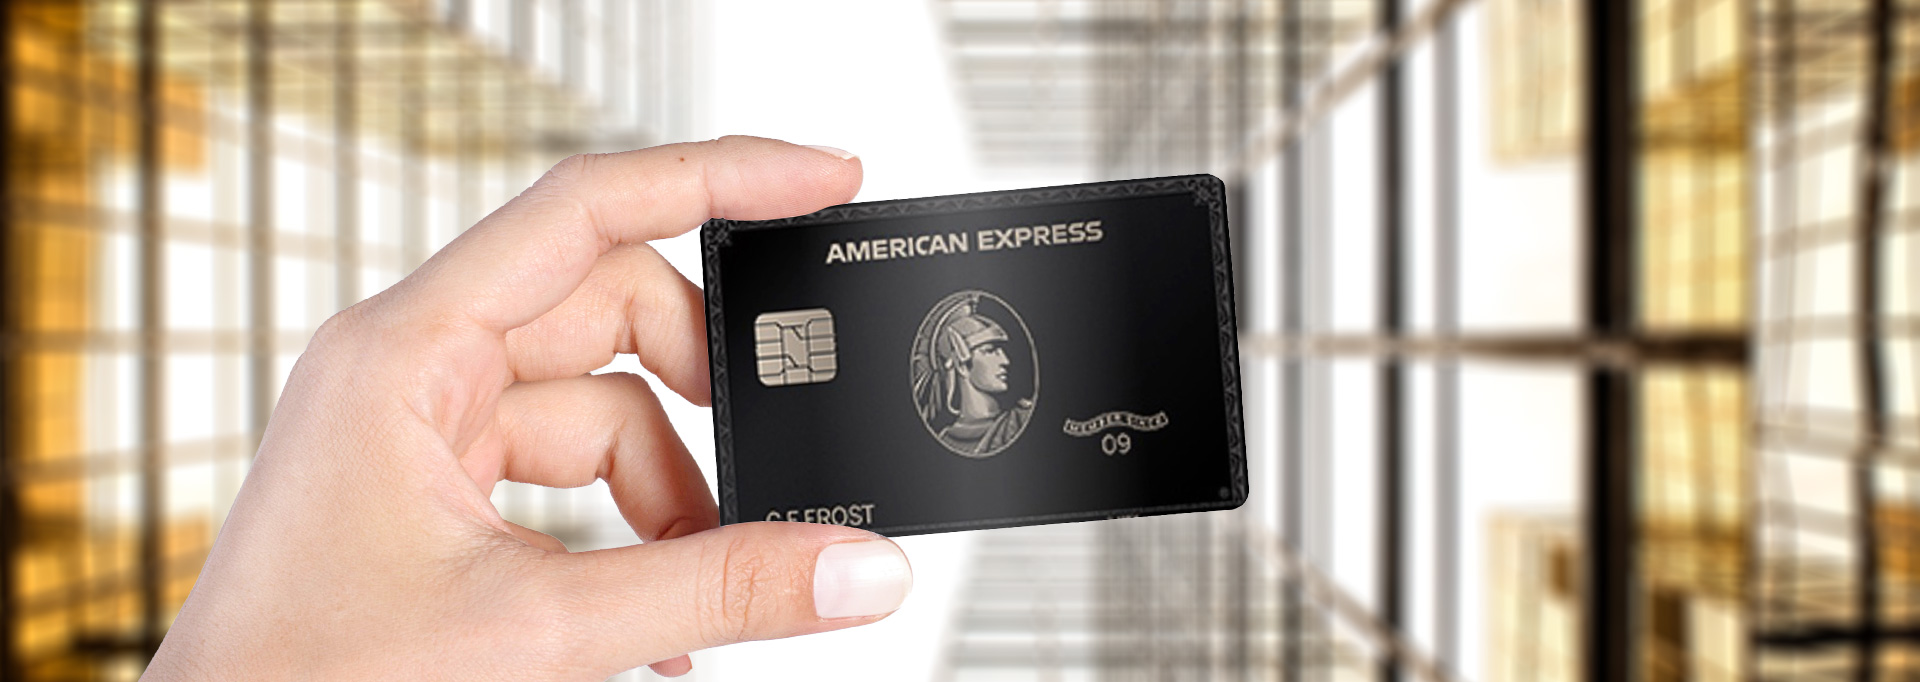 hand holding American Express centurion black card